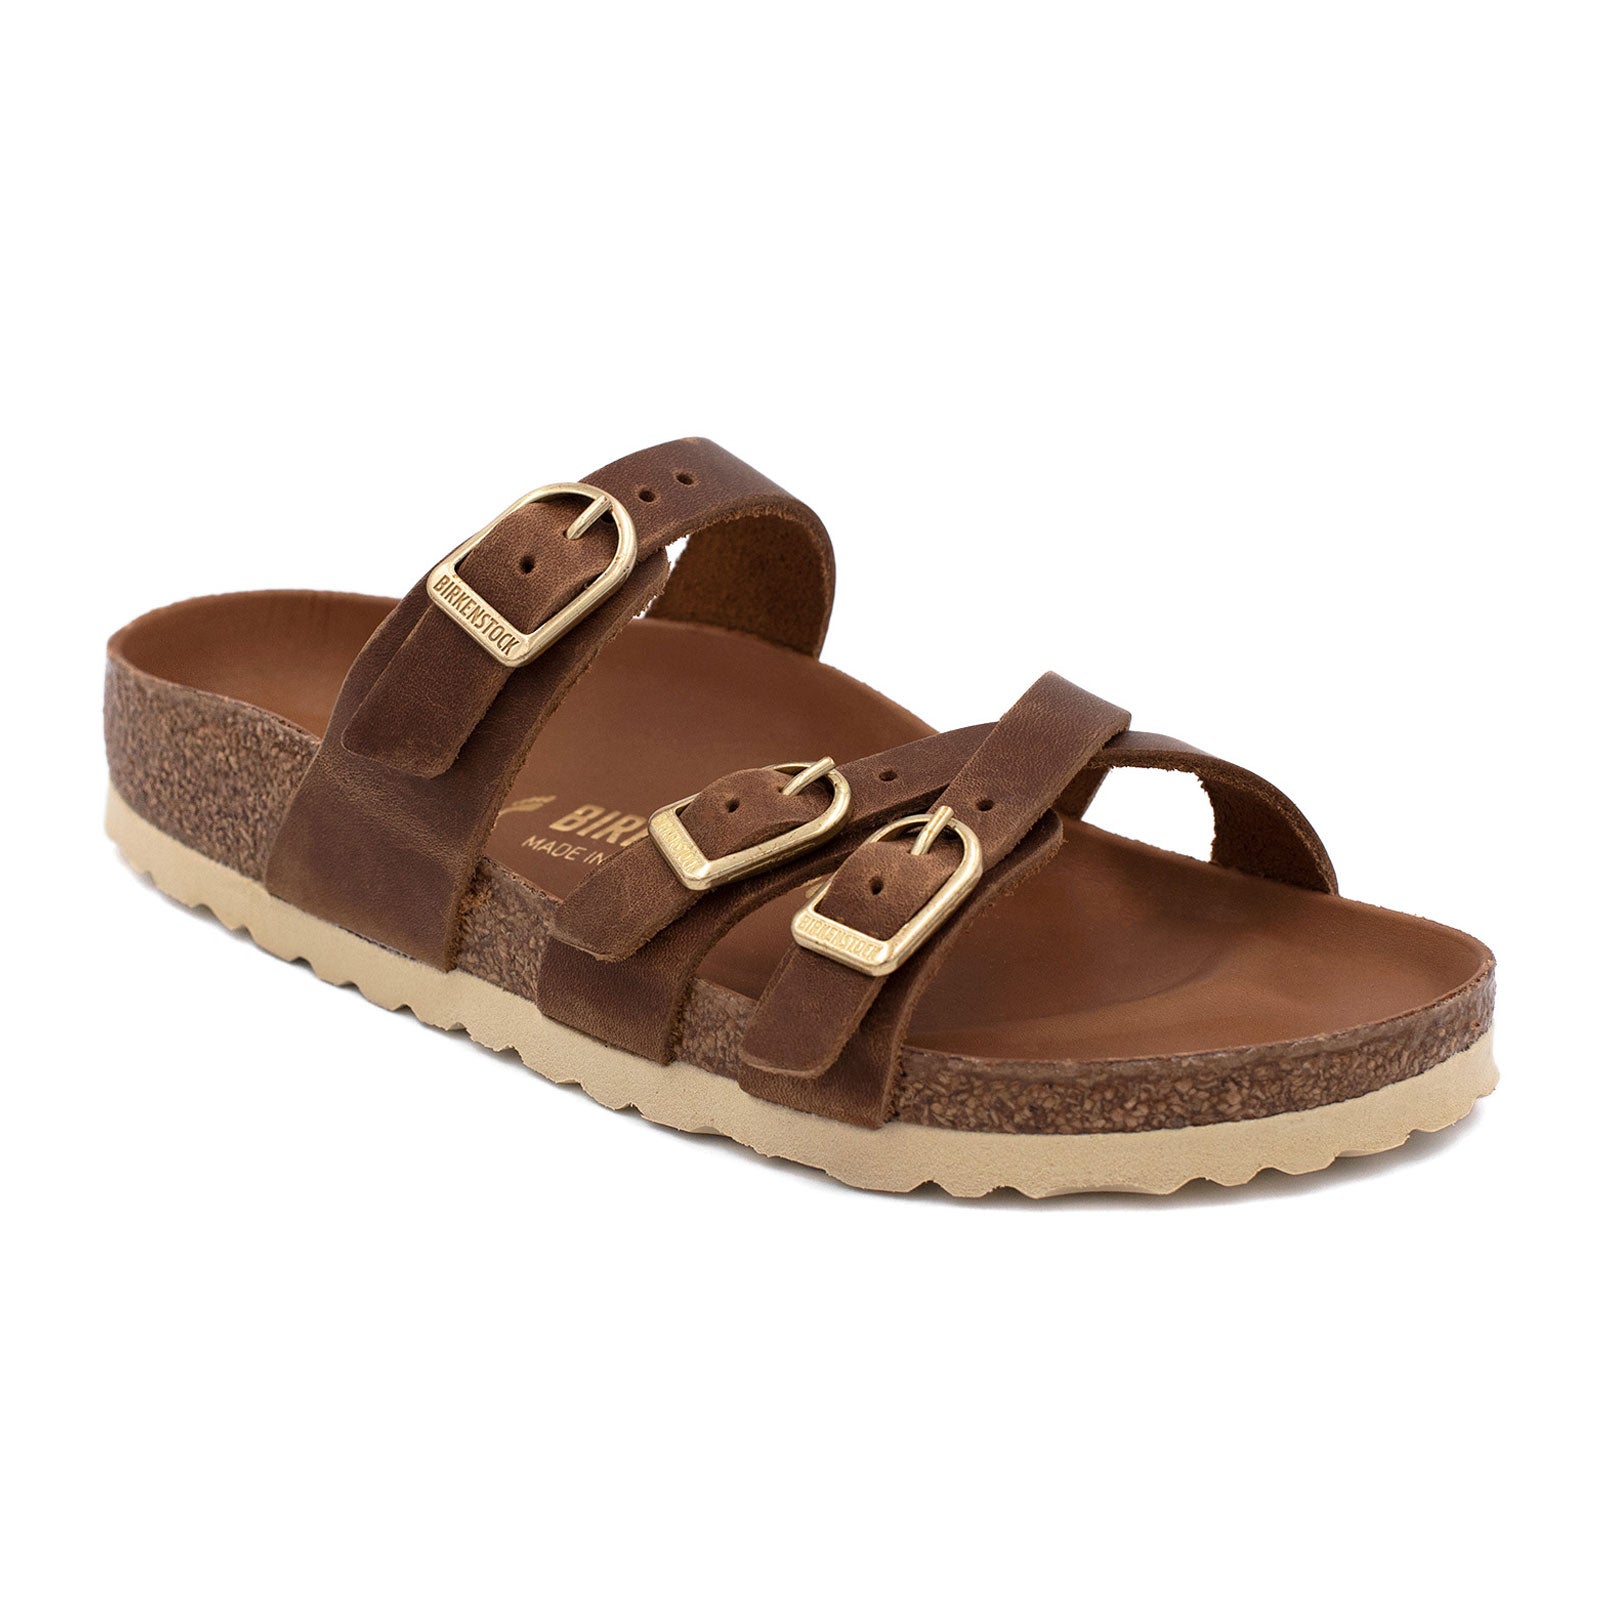 Maryanne Jones Tigge Sølv Birkenstock Sandals, Shoes & Clogs | The Heel Shoe Fitters